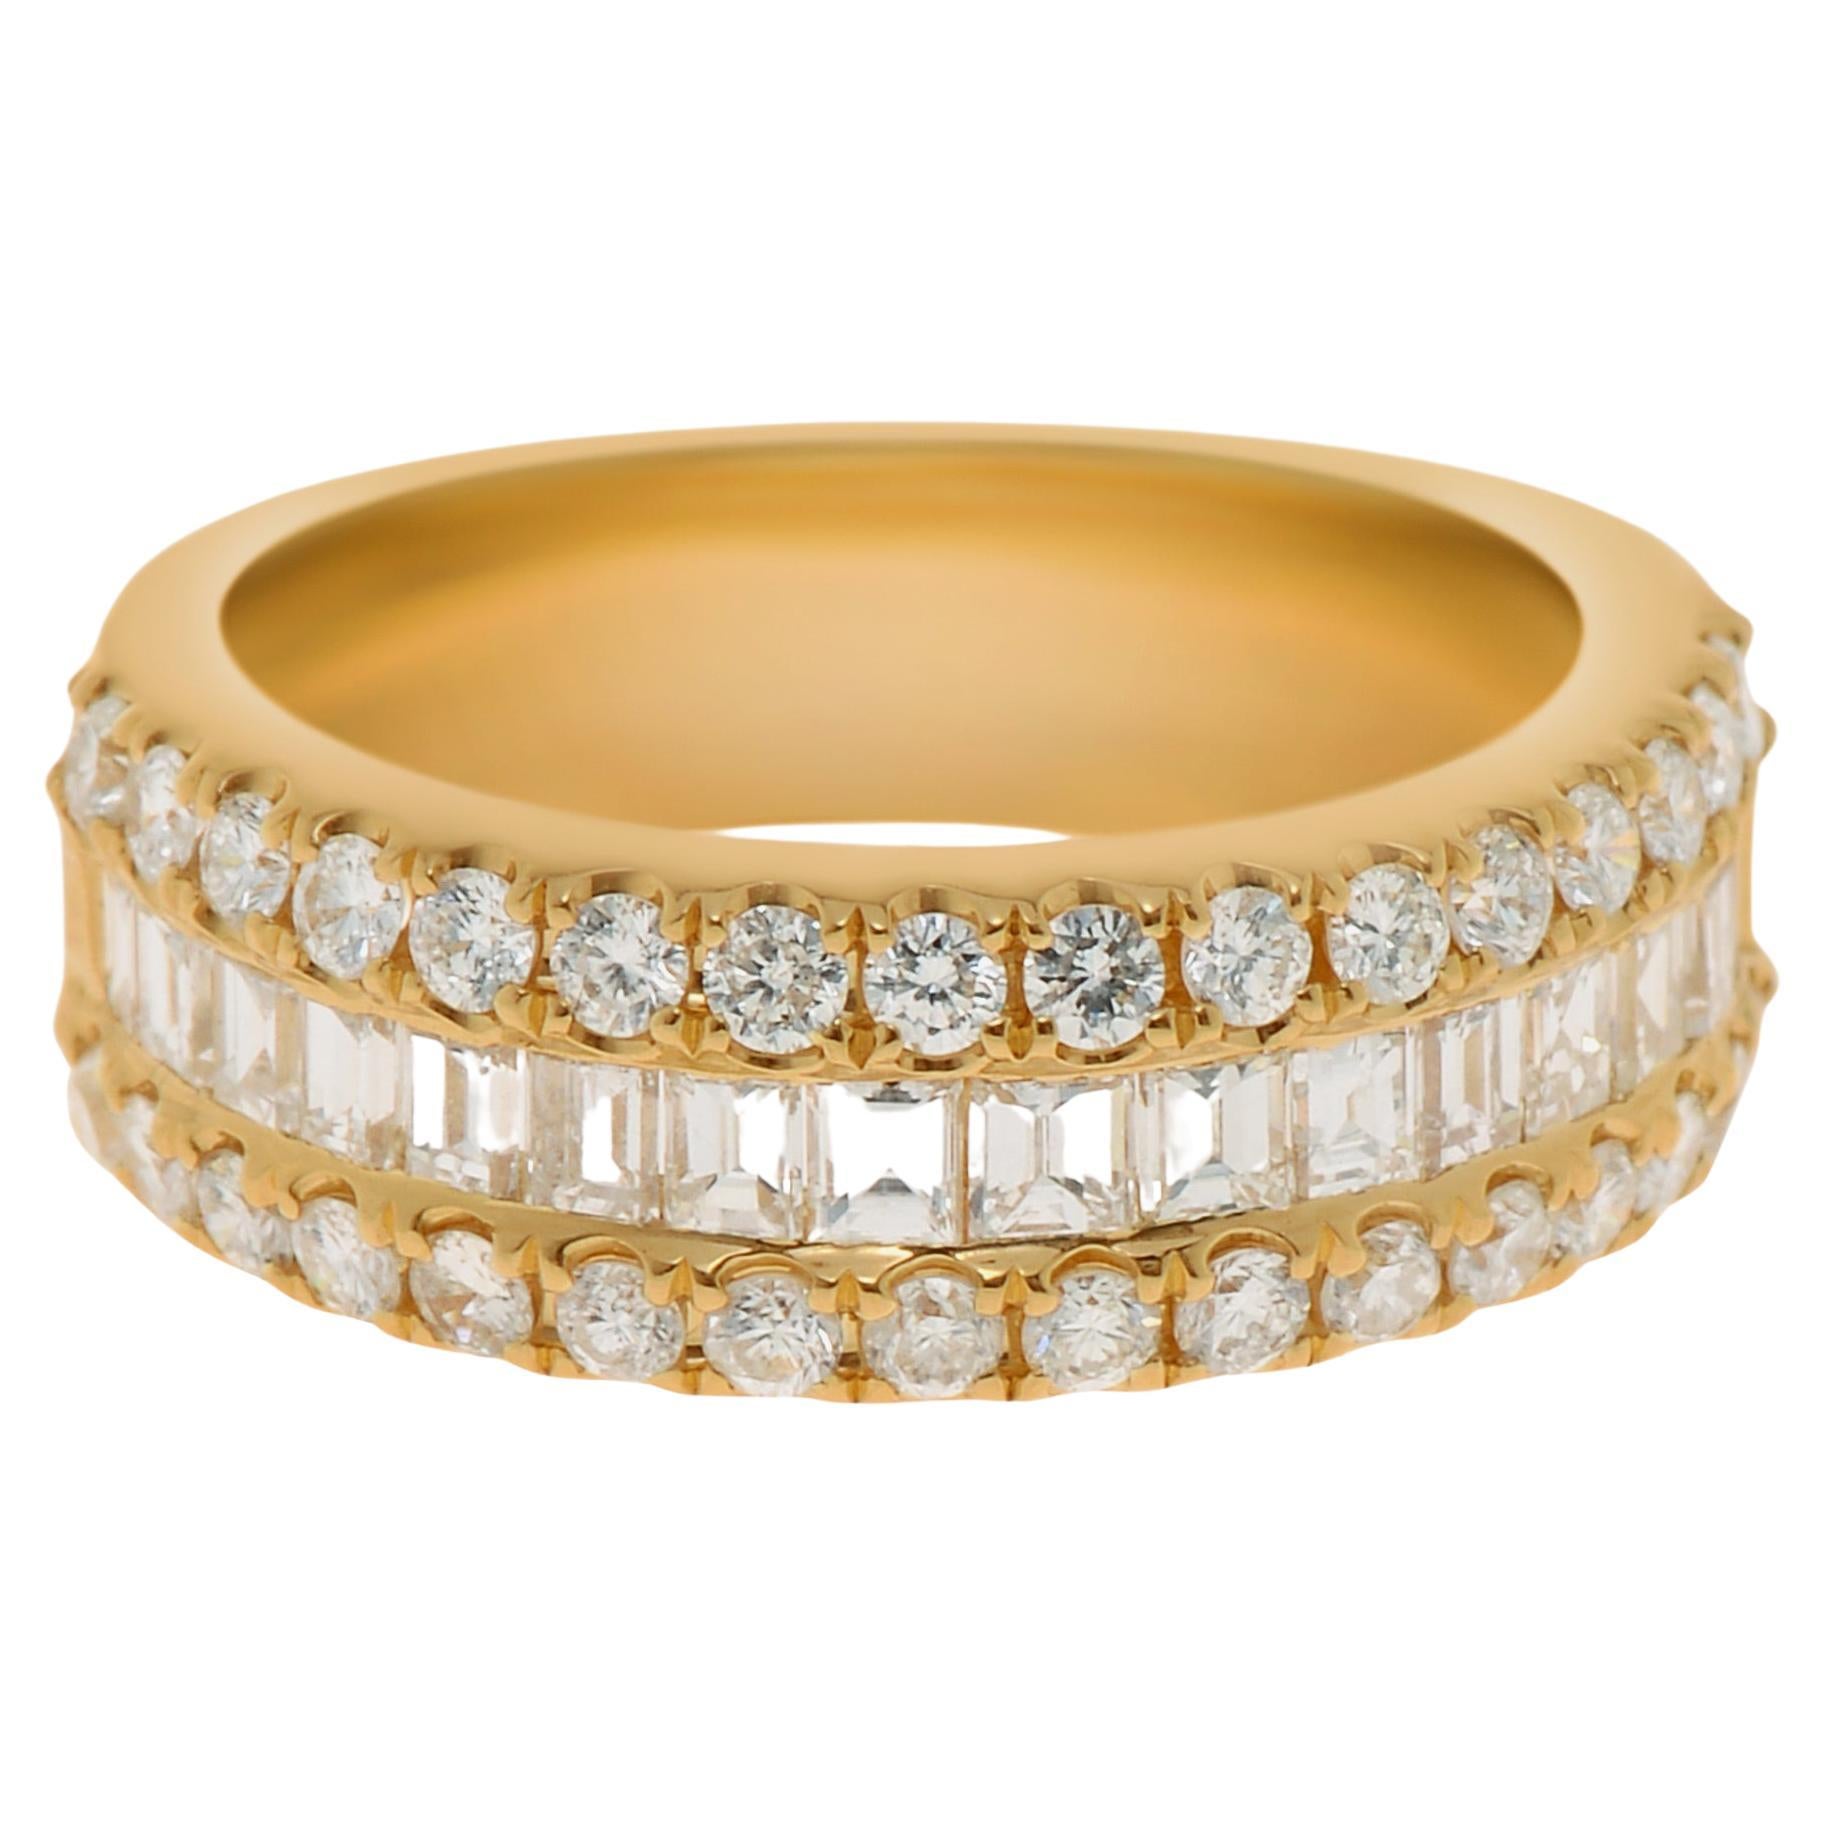 Tresorra 18K Yellow Gold, Diamond Band Ring Sz. 6.25